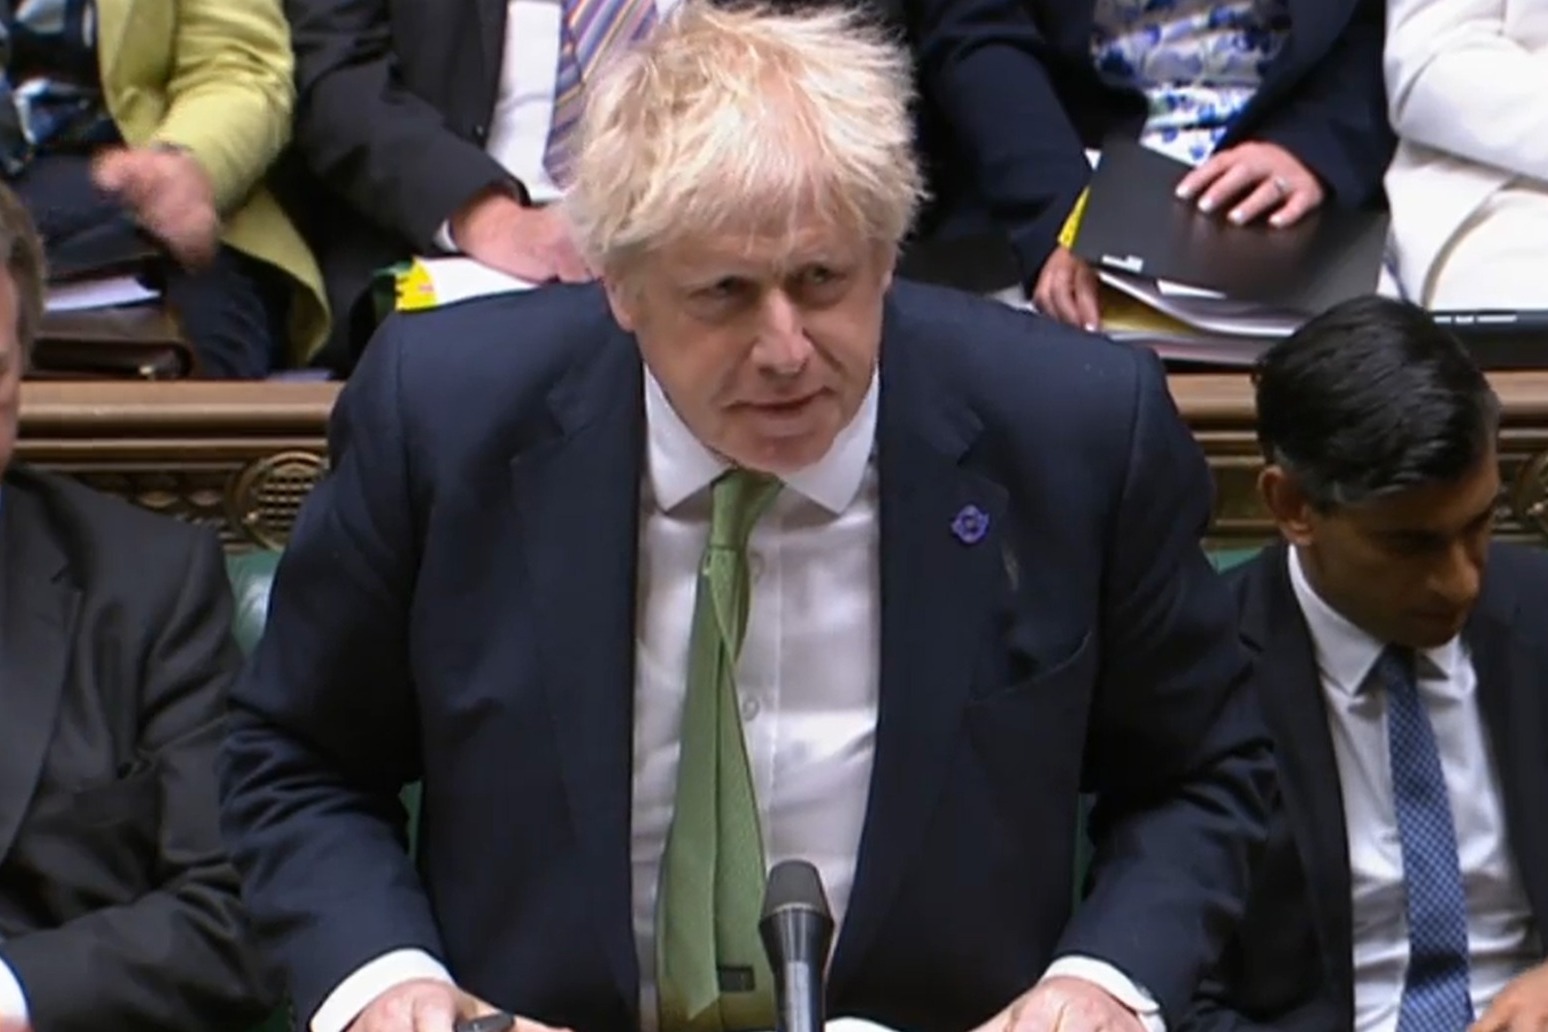 Boris Johnson faces no further action in 126-fine partygate investigation 